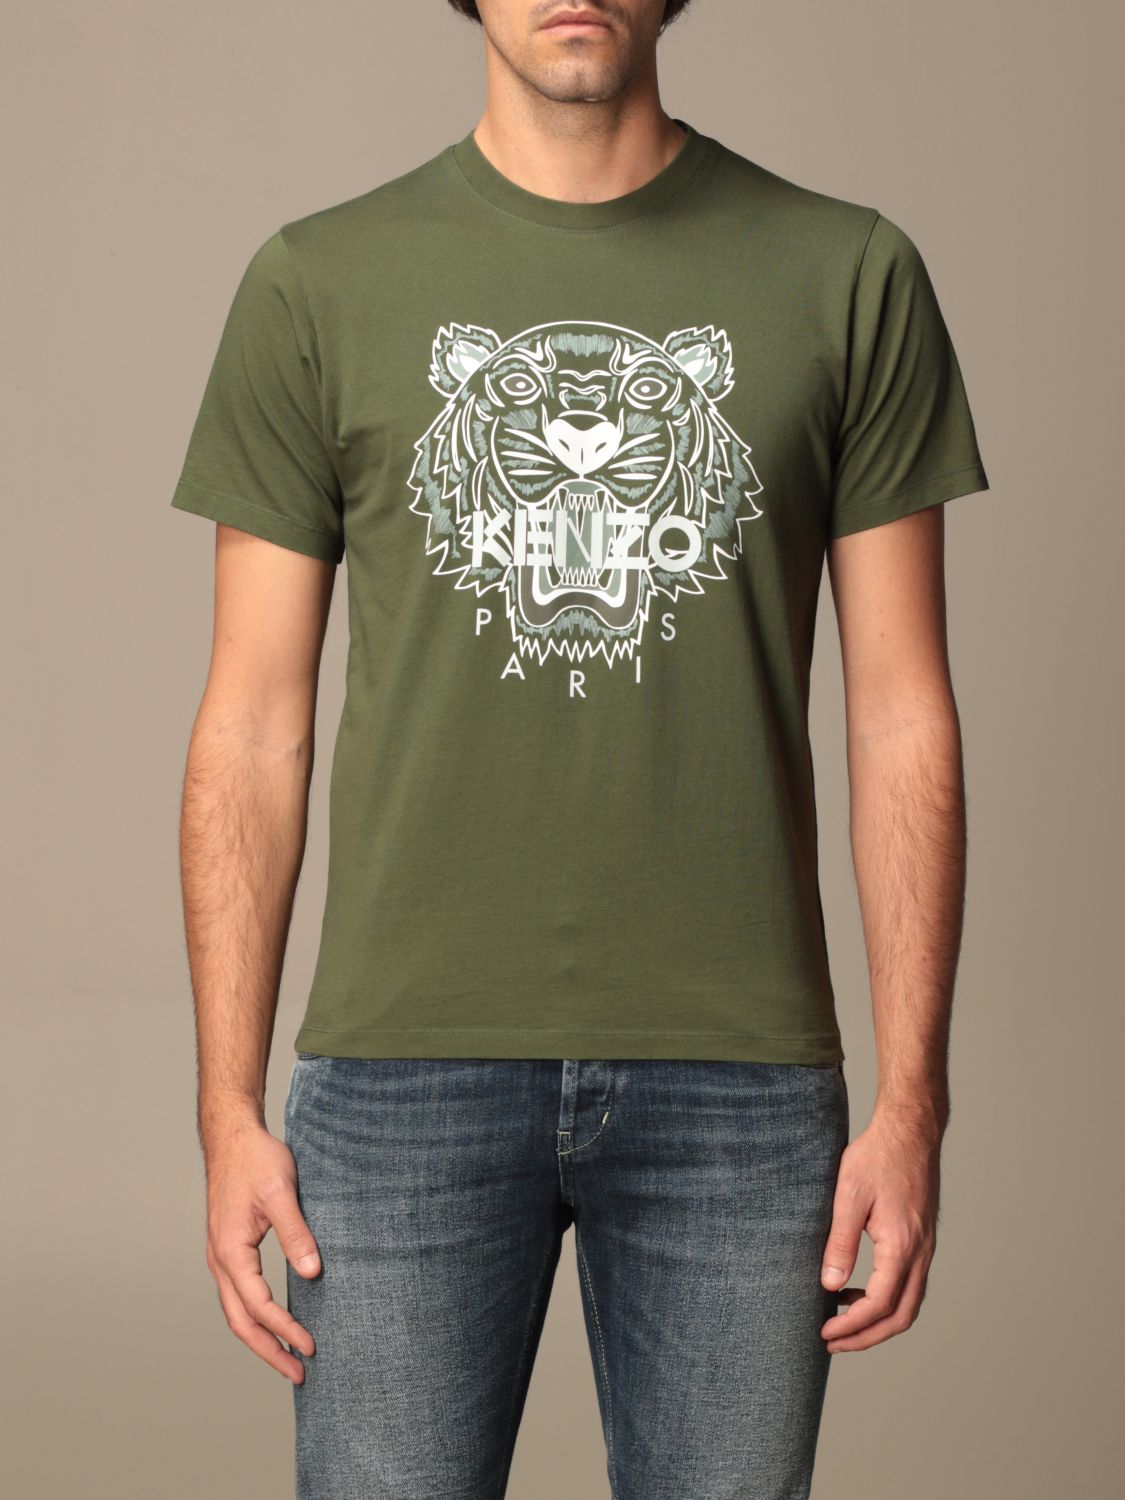 timmerman struik Zenuwinzinking KENZO: cotton T-shirt with Tiger Paris logo - Kaki | Kenzo t-shirt  PFB55TS0204YA online on GIGLIO.COM